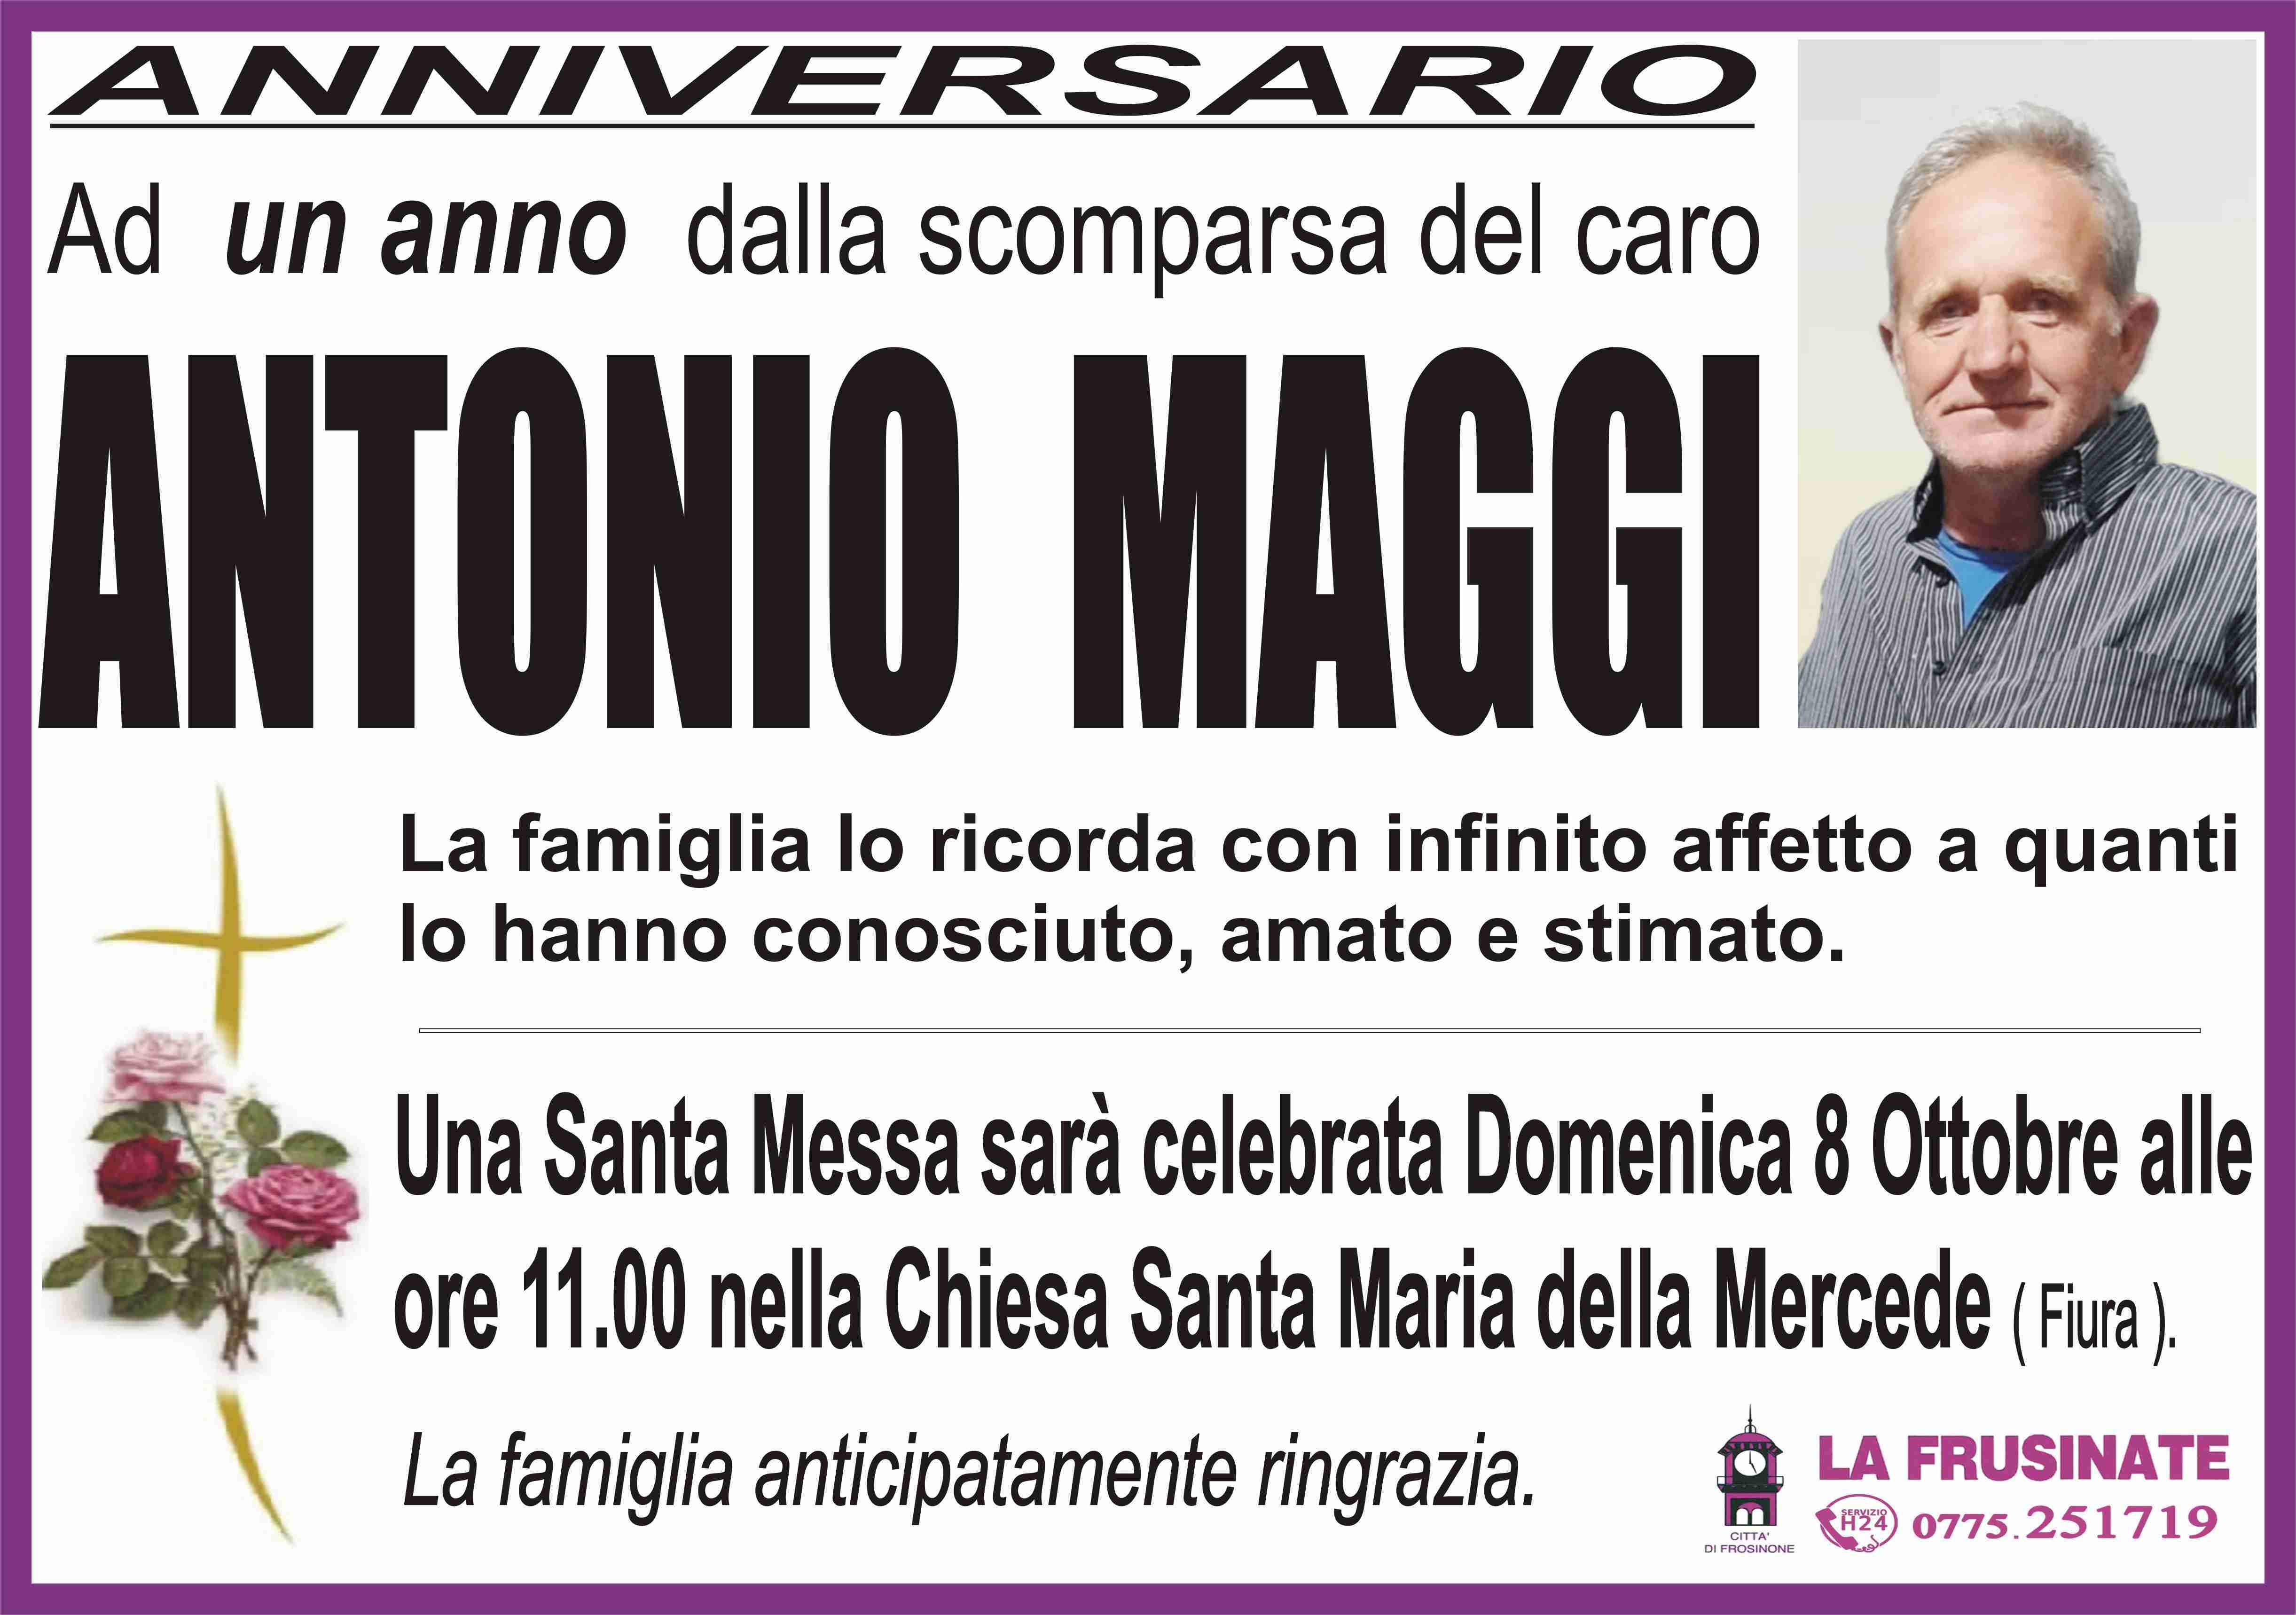 Antonio Maggi